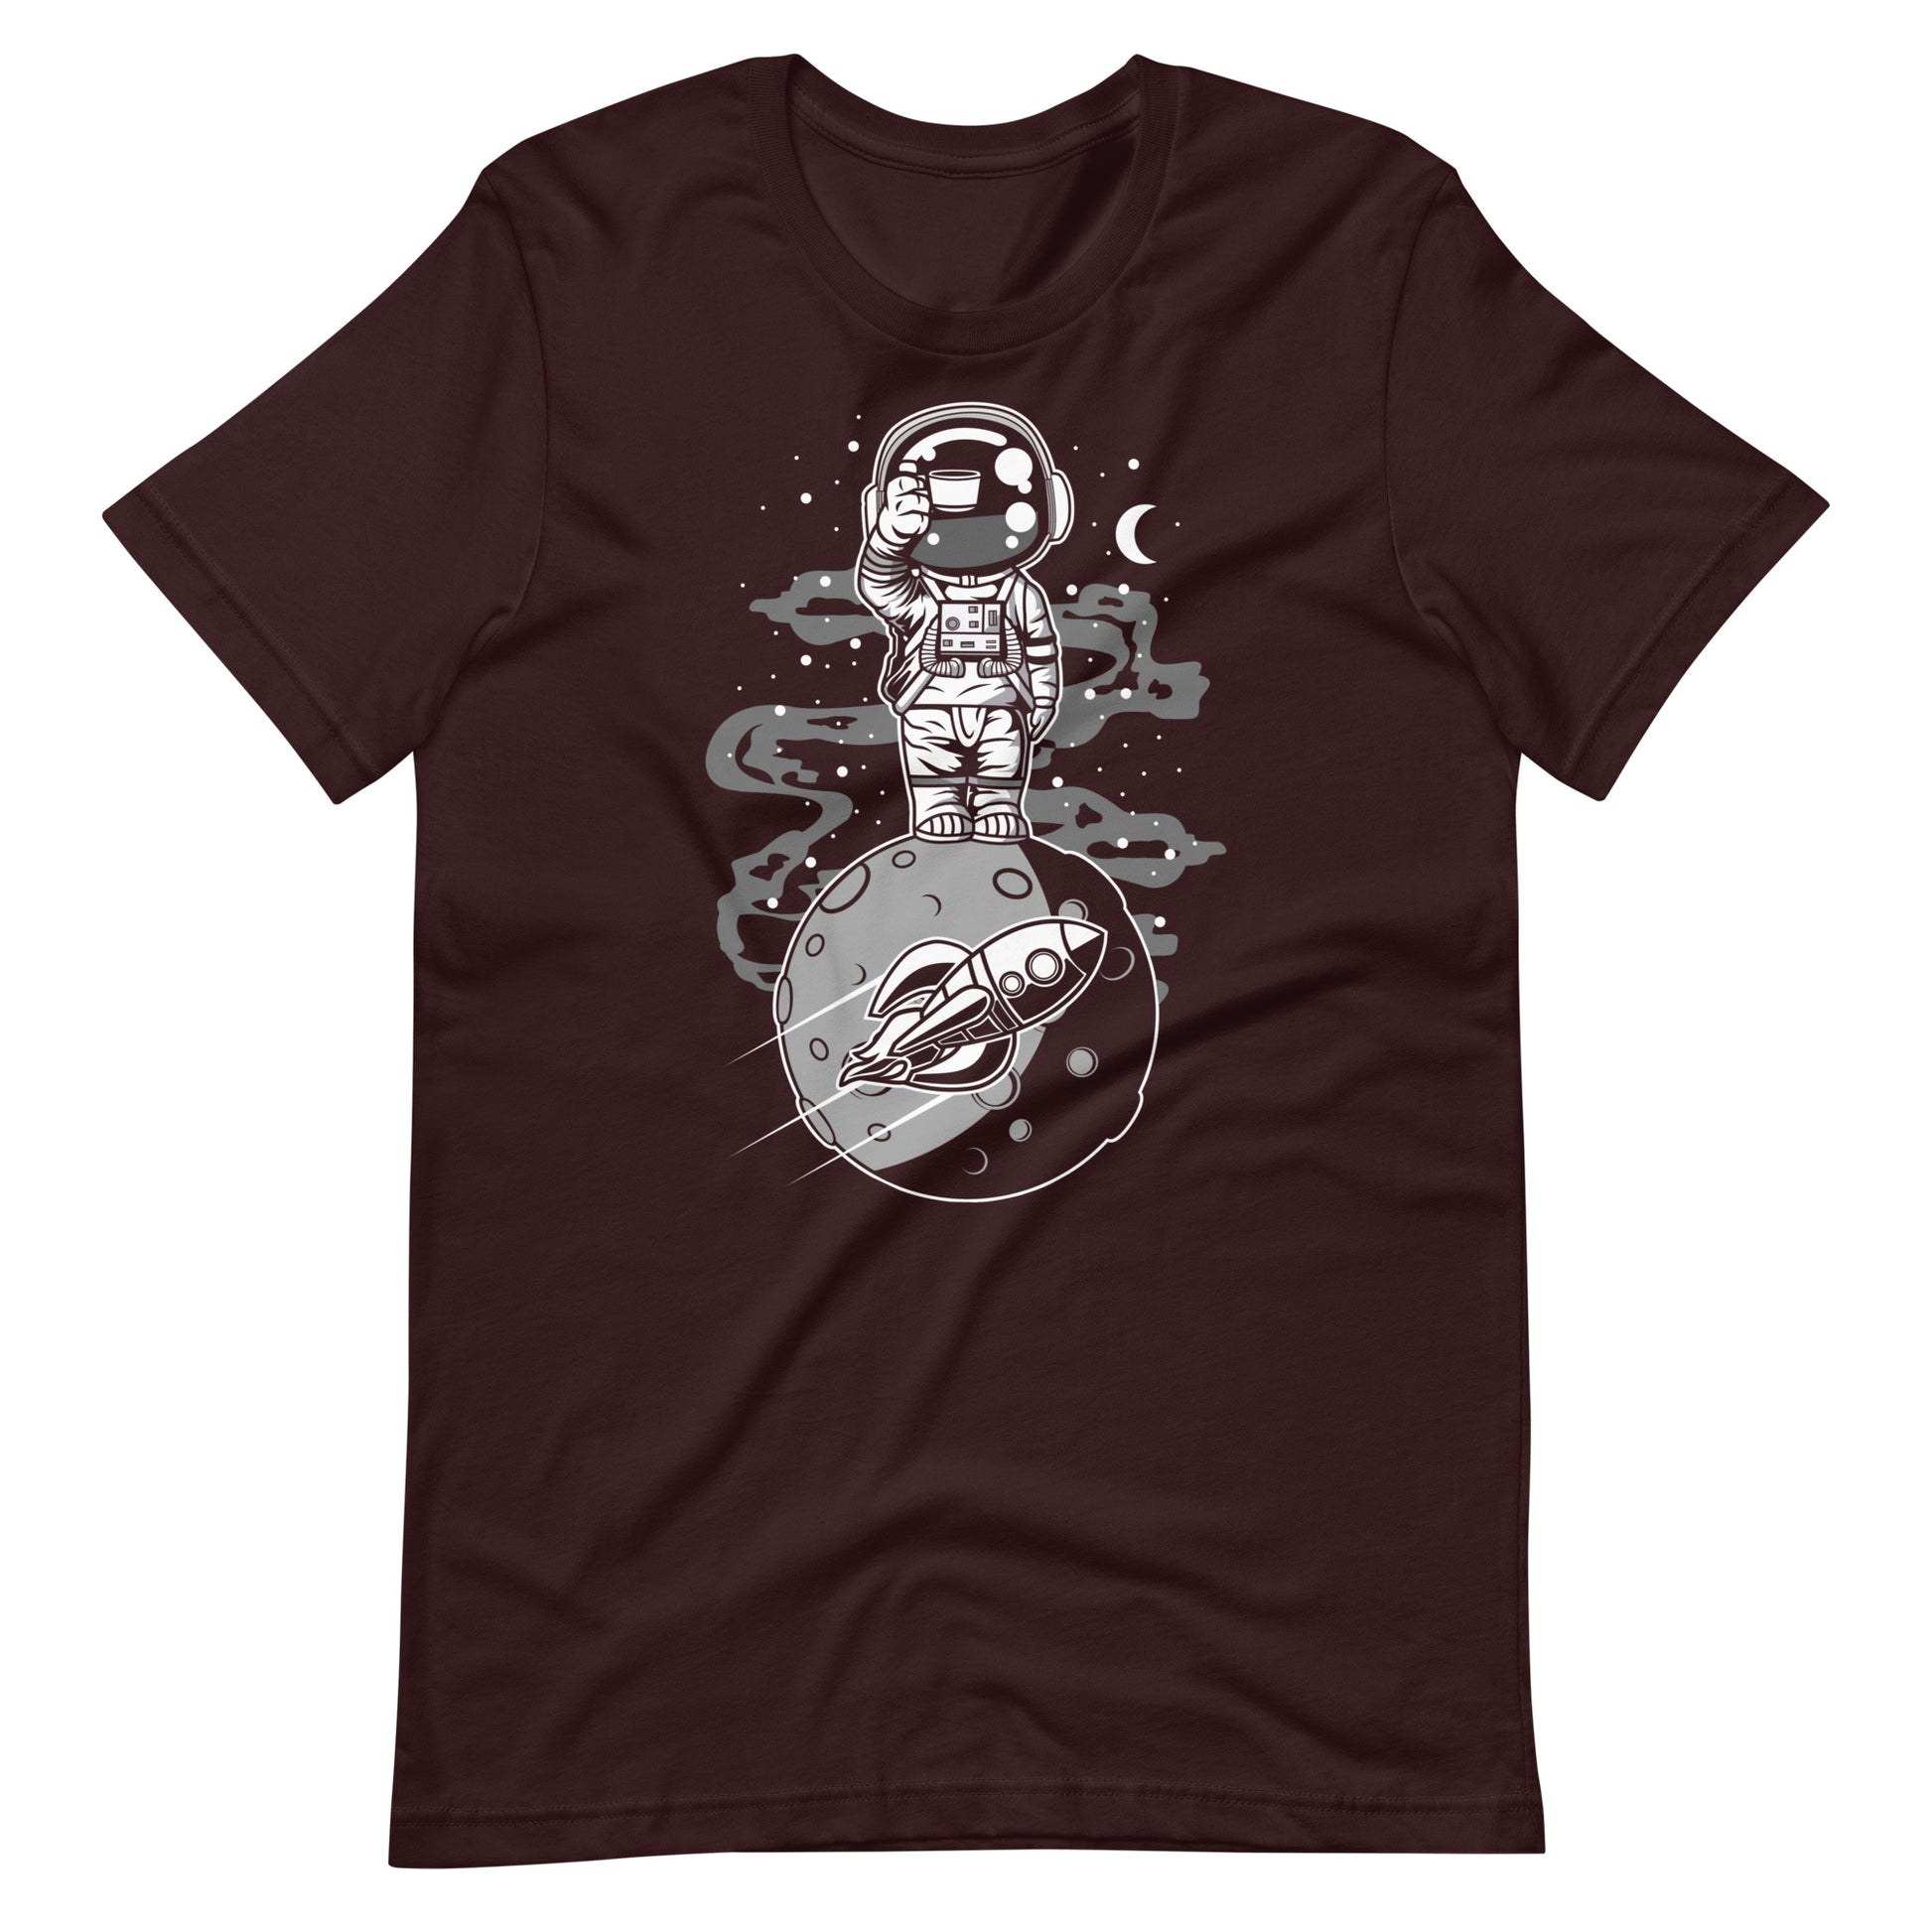 Astronaut Standing on the Moon - Men's t-shirt - Oxblood Black Front